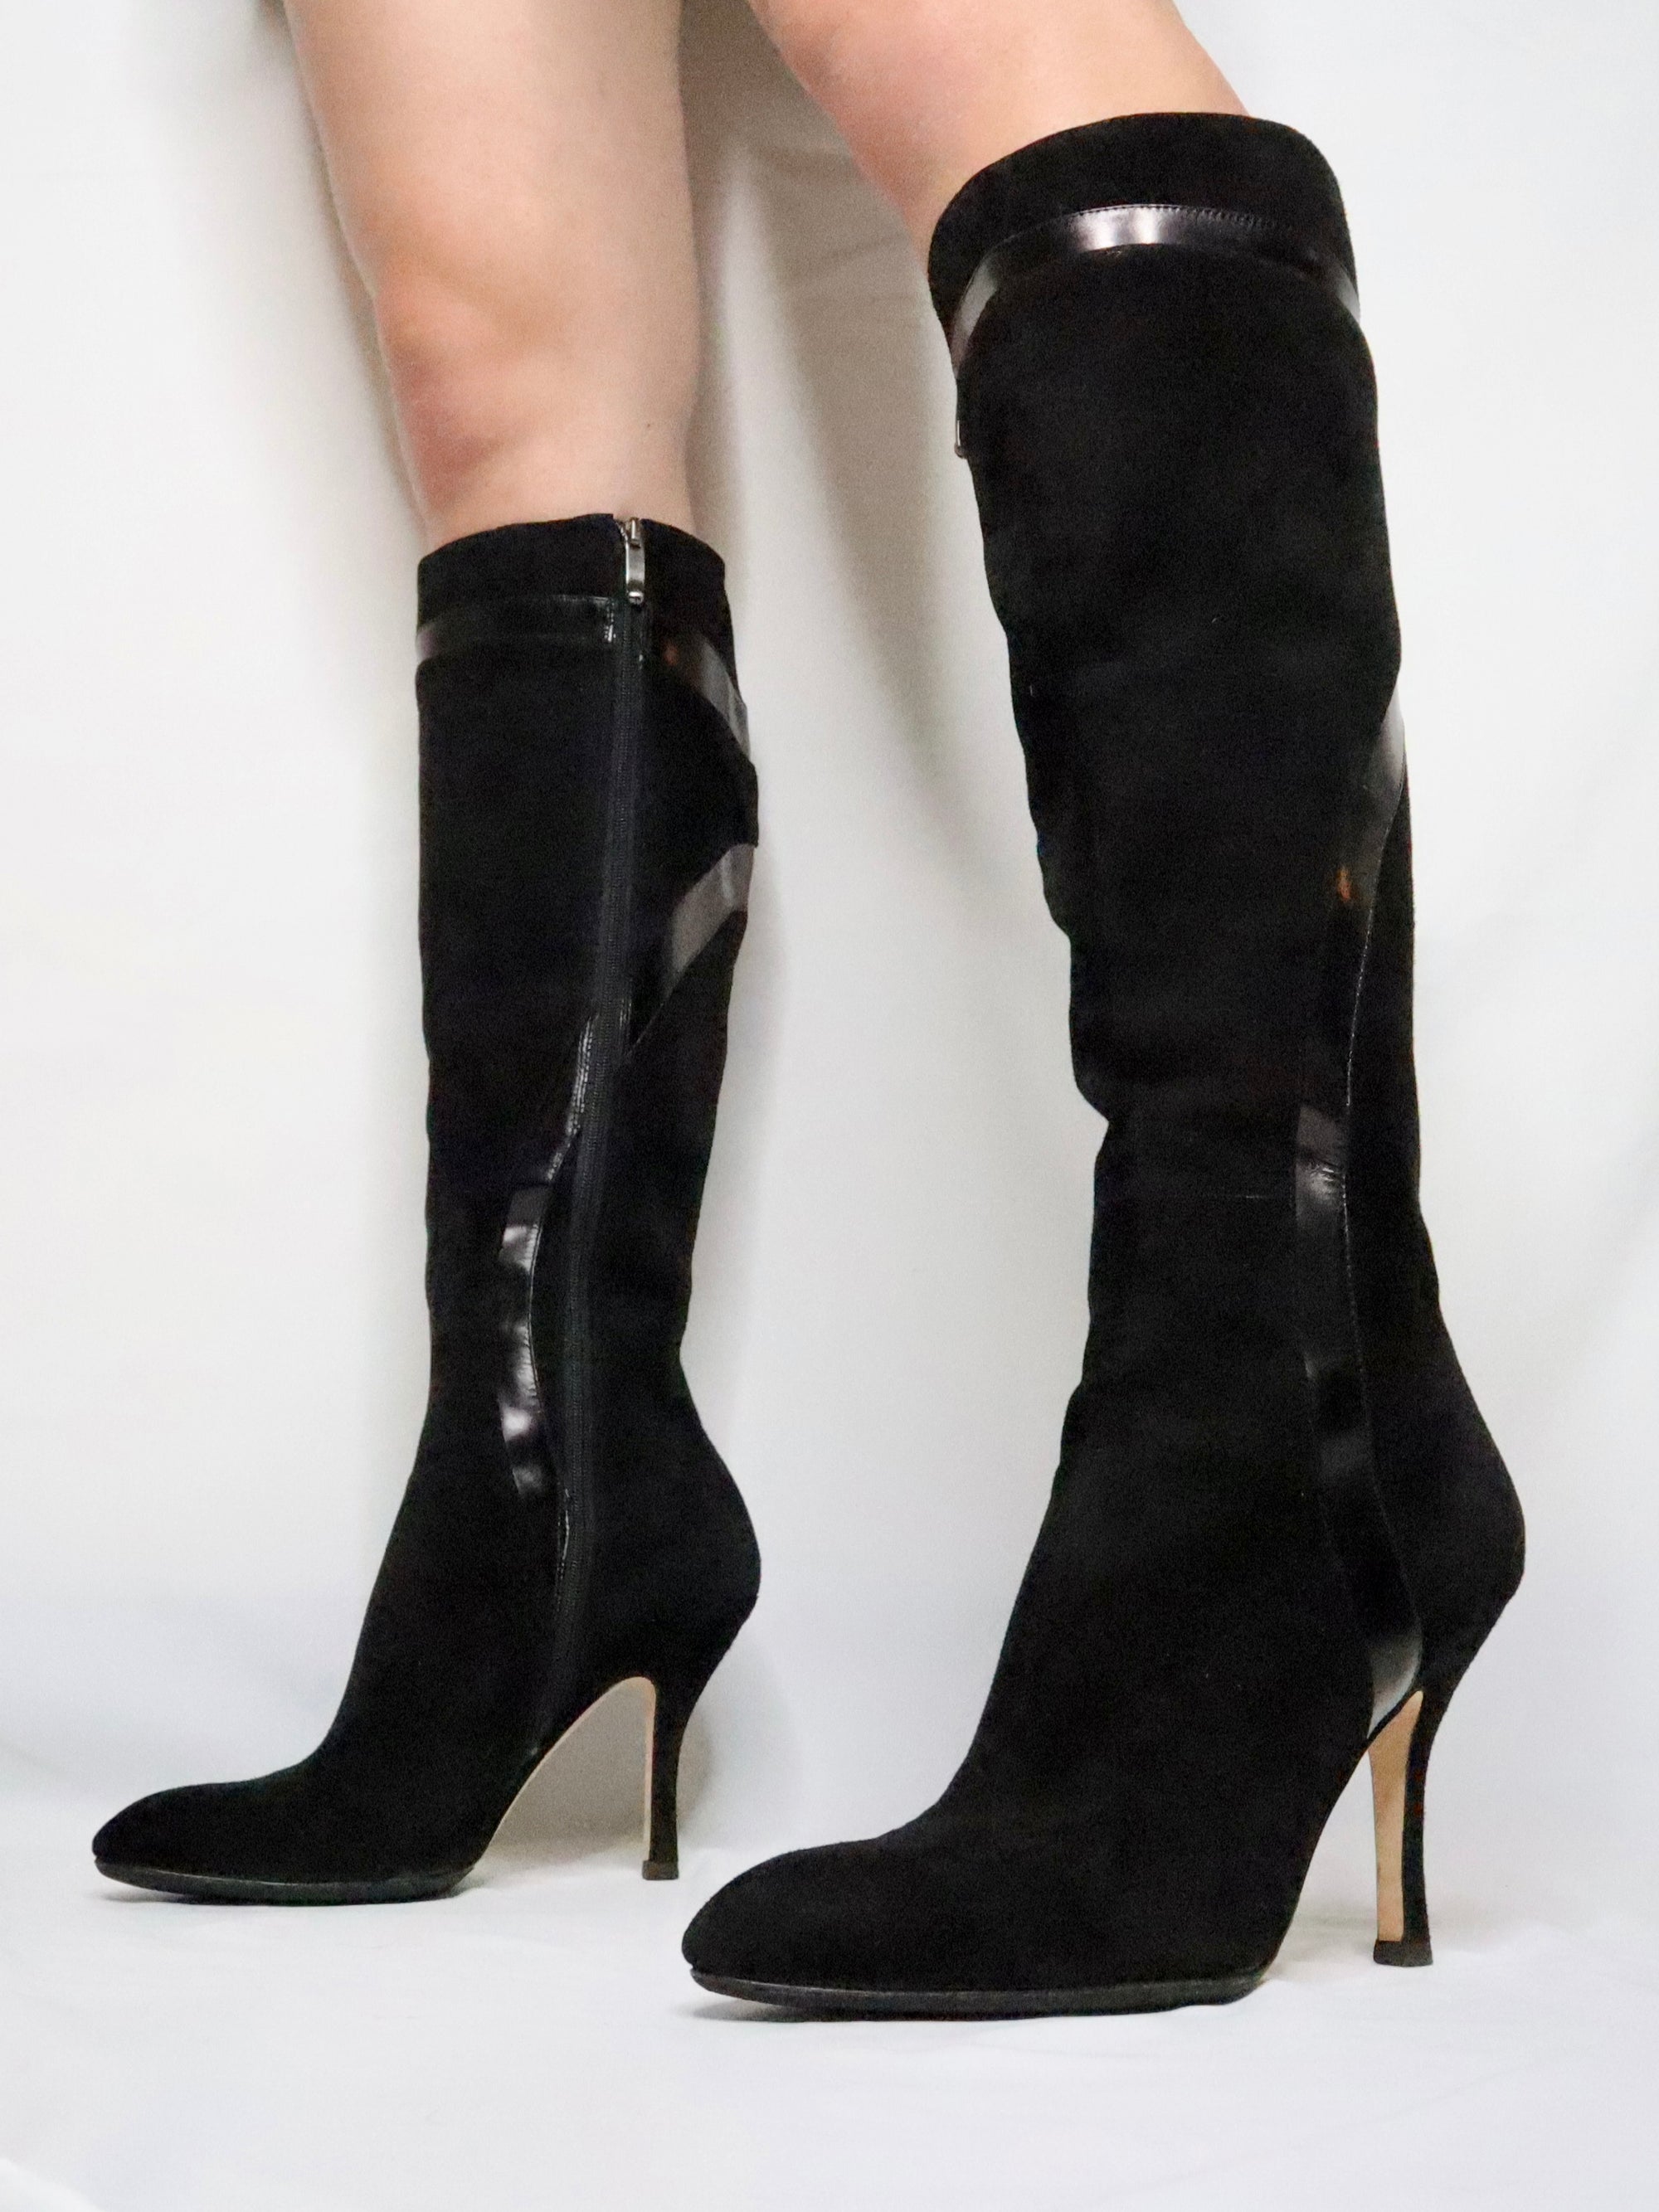 Black Knee High Boots (7 US)